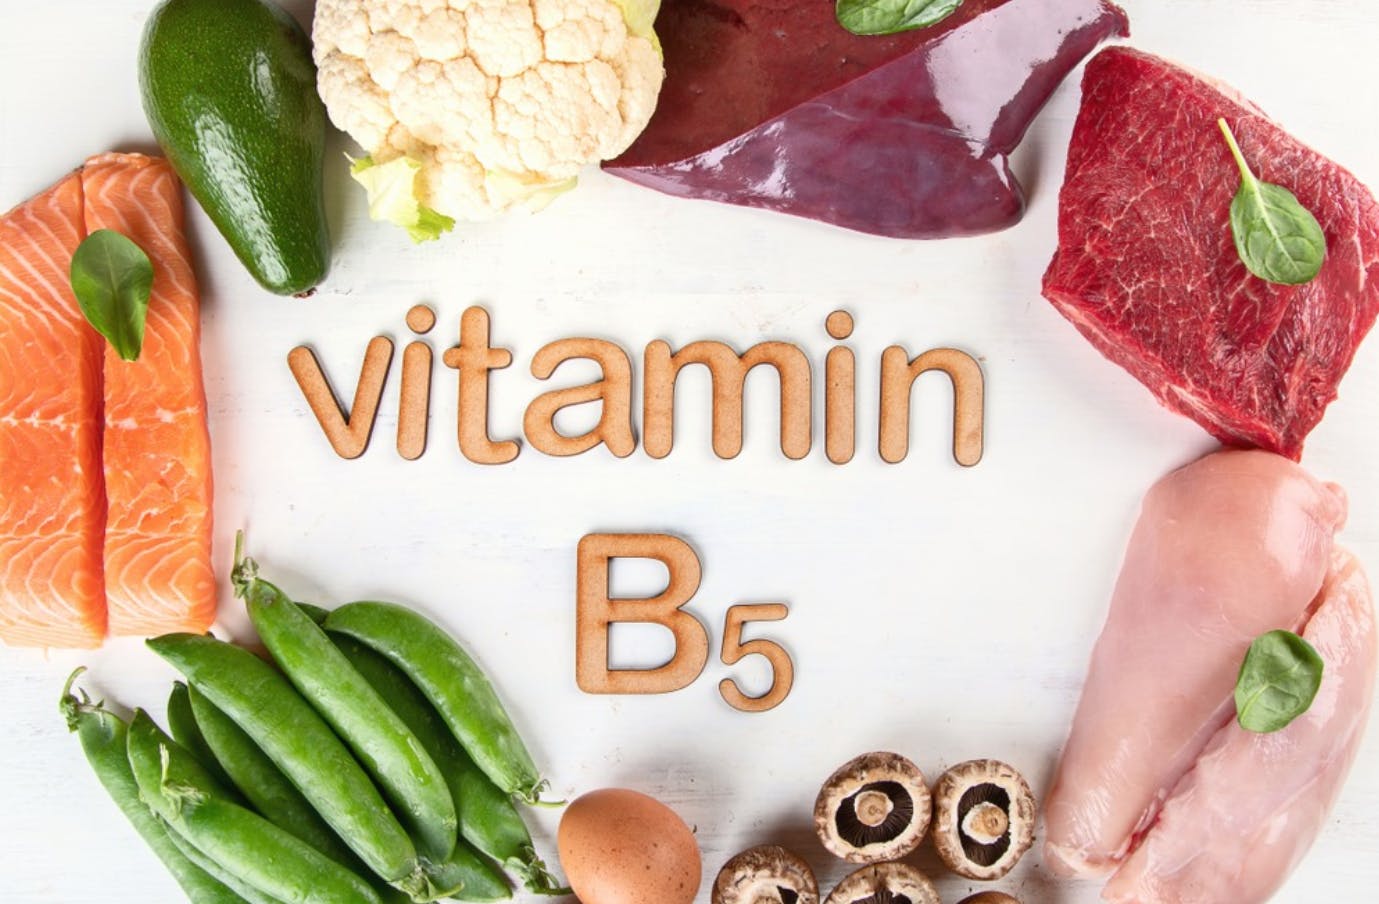 Foods containing vitamin B5